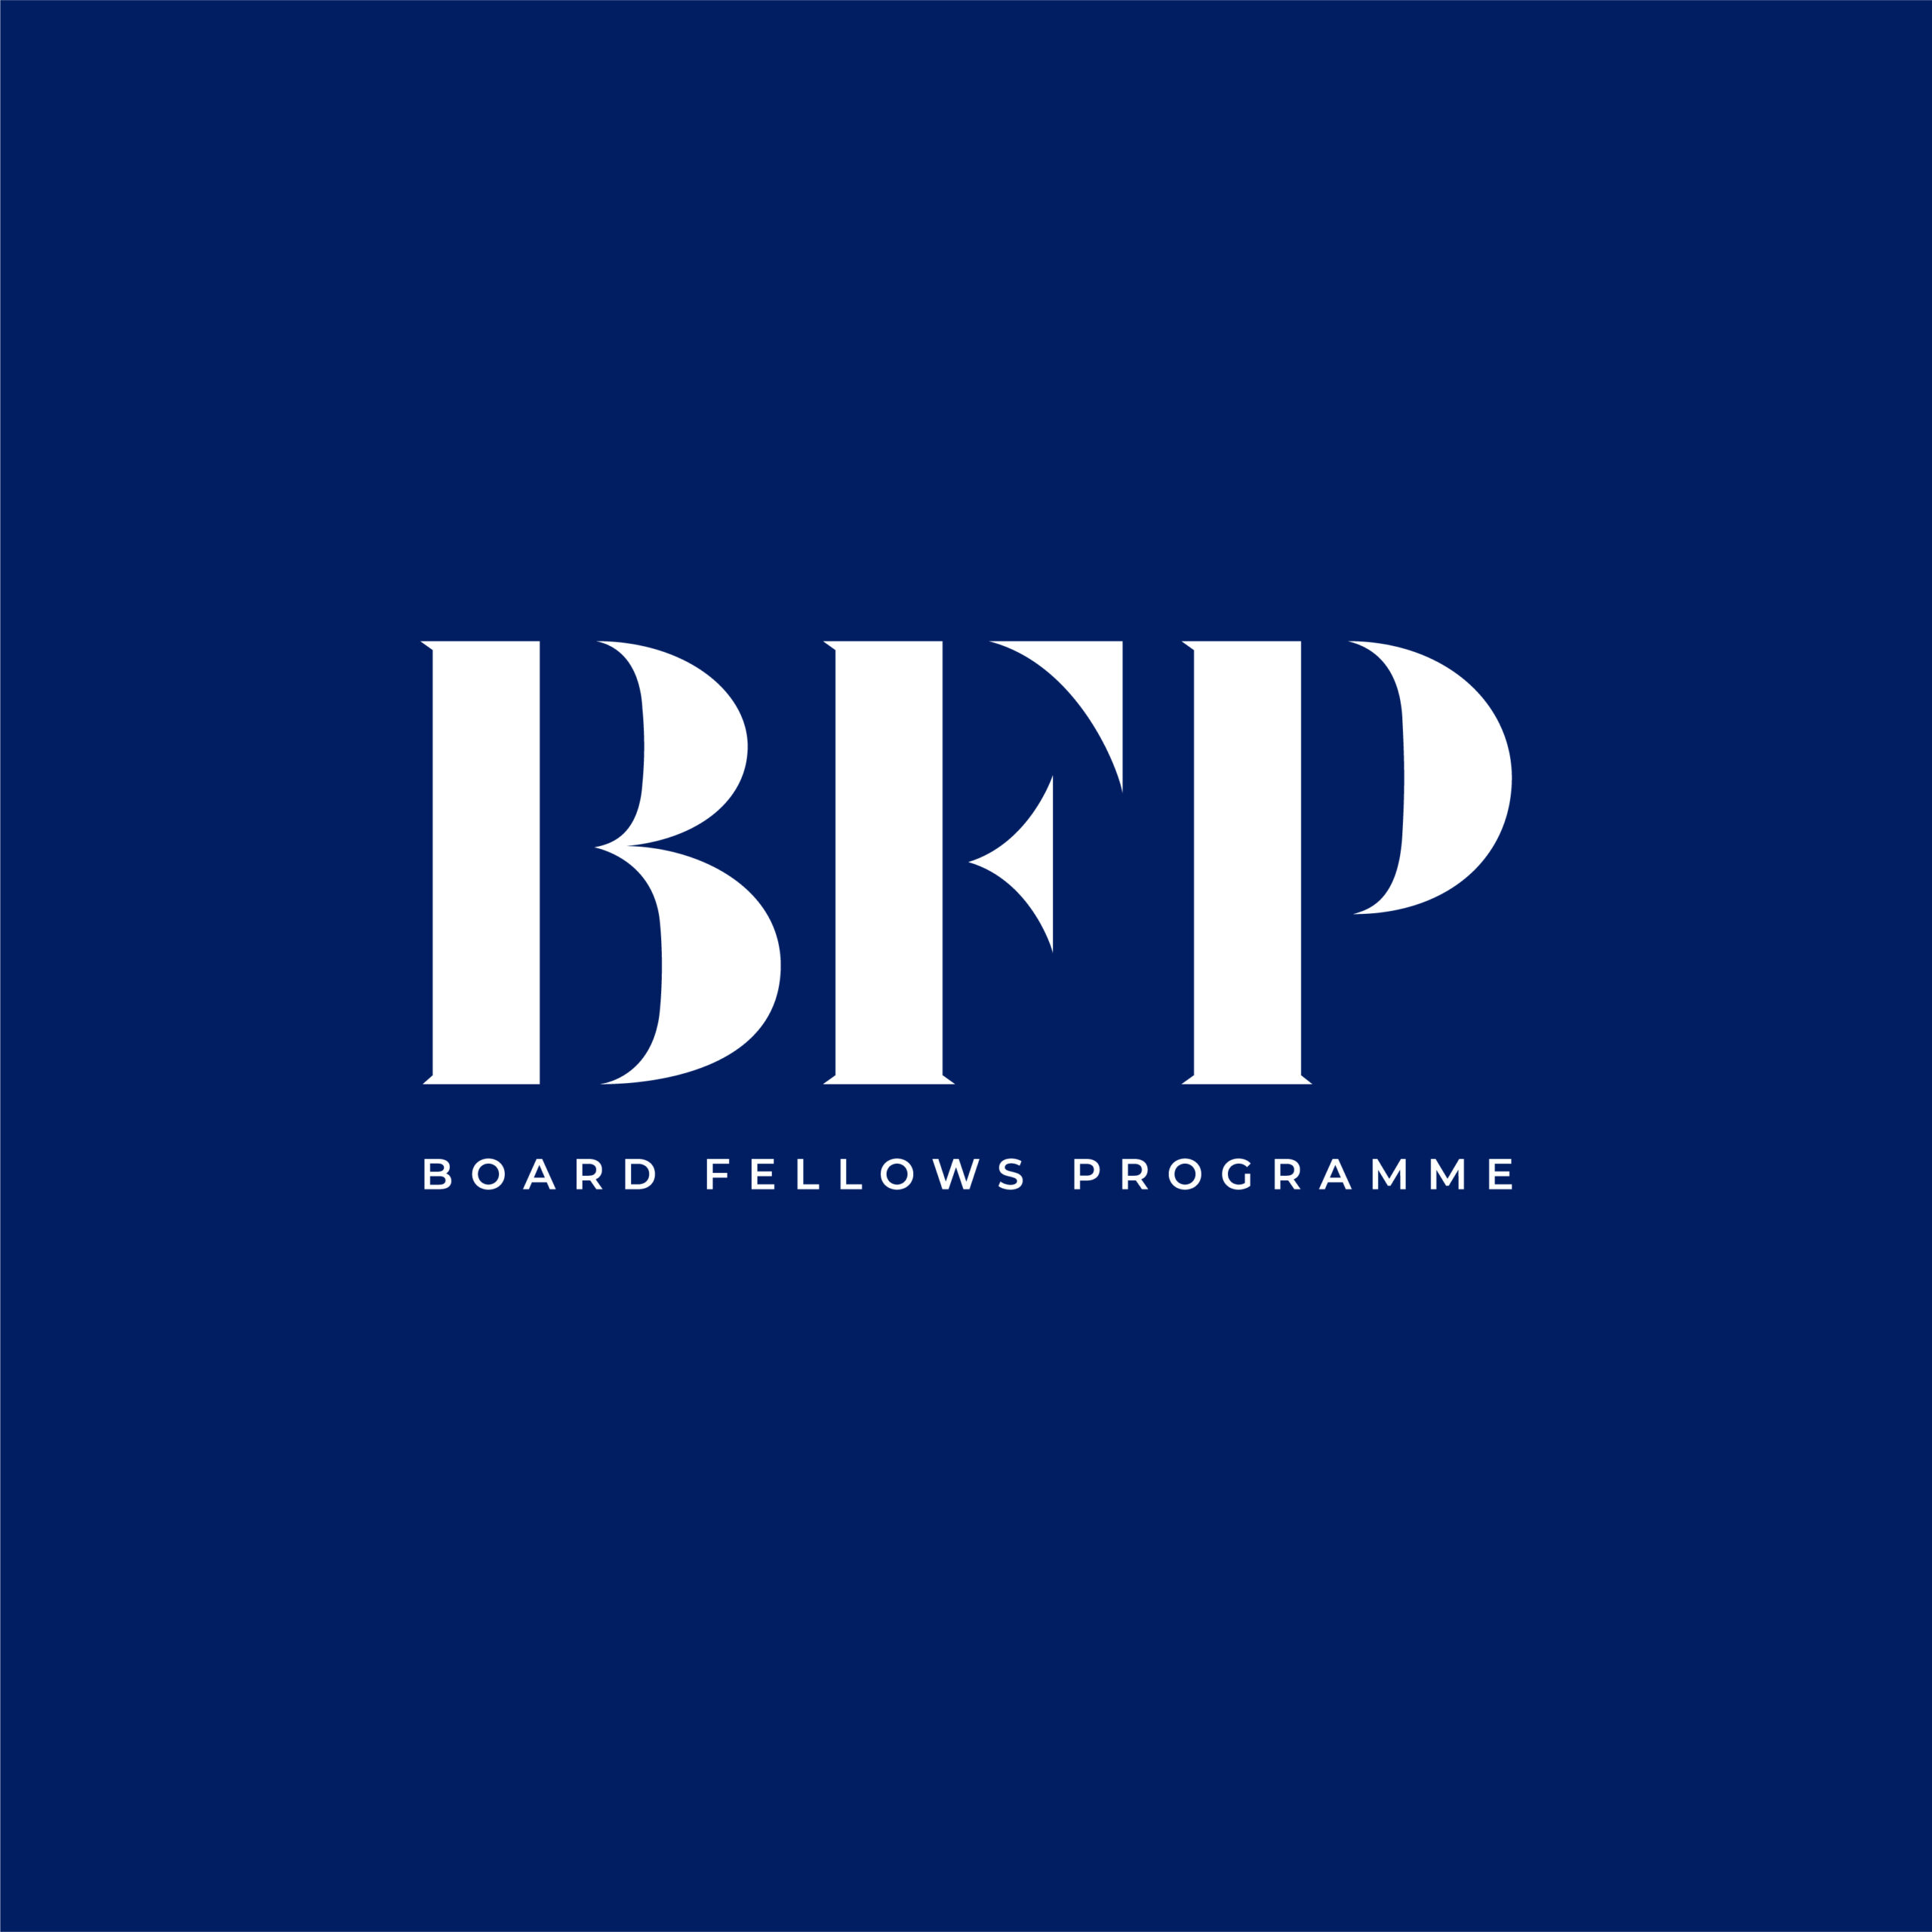 LBS Board Fellows Programme